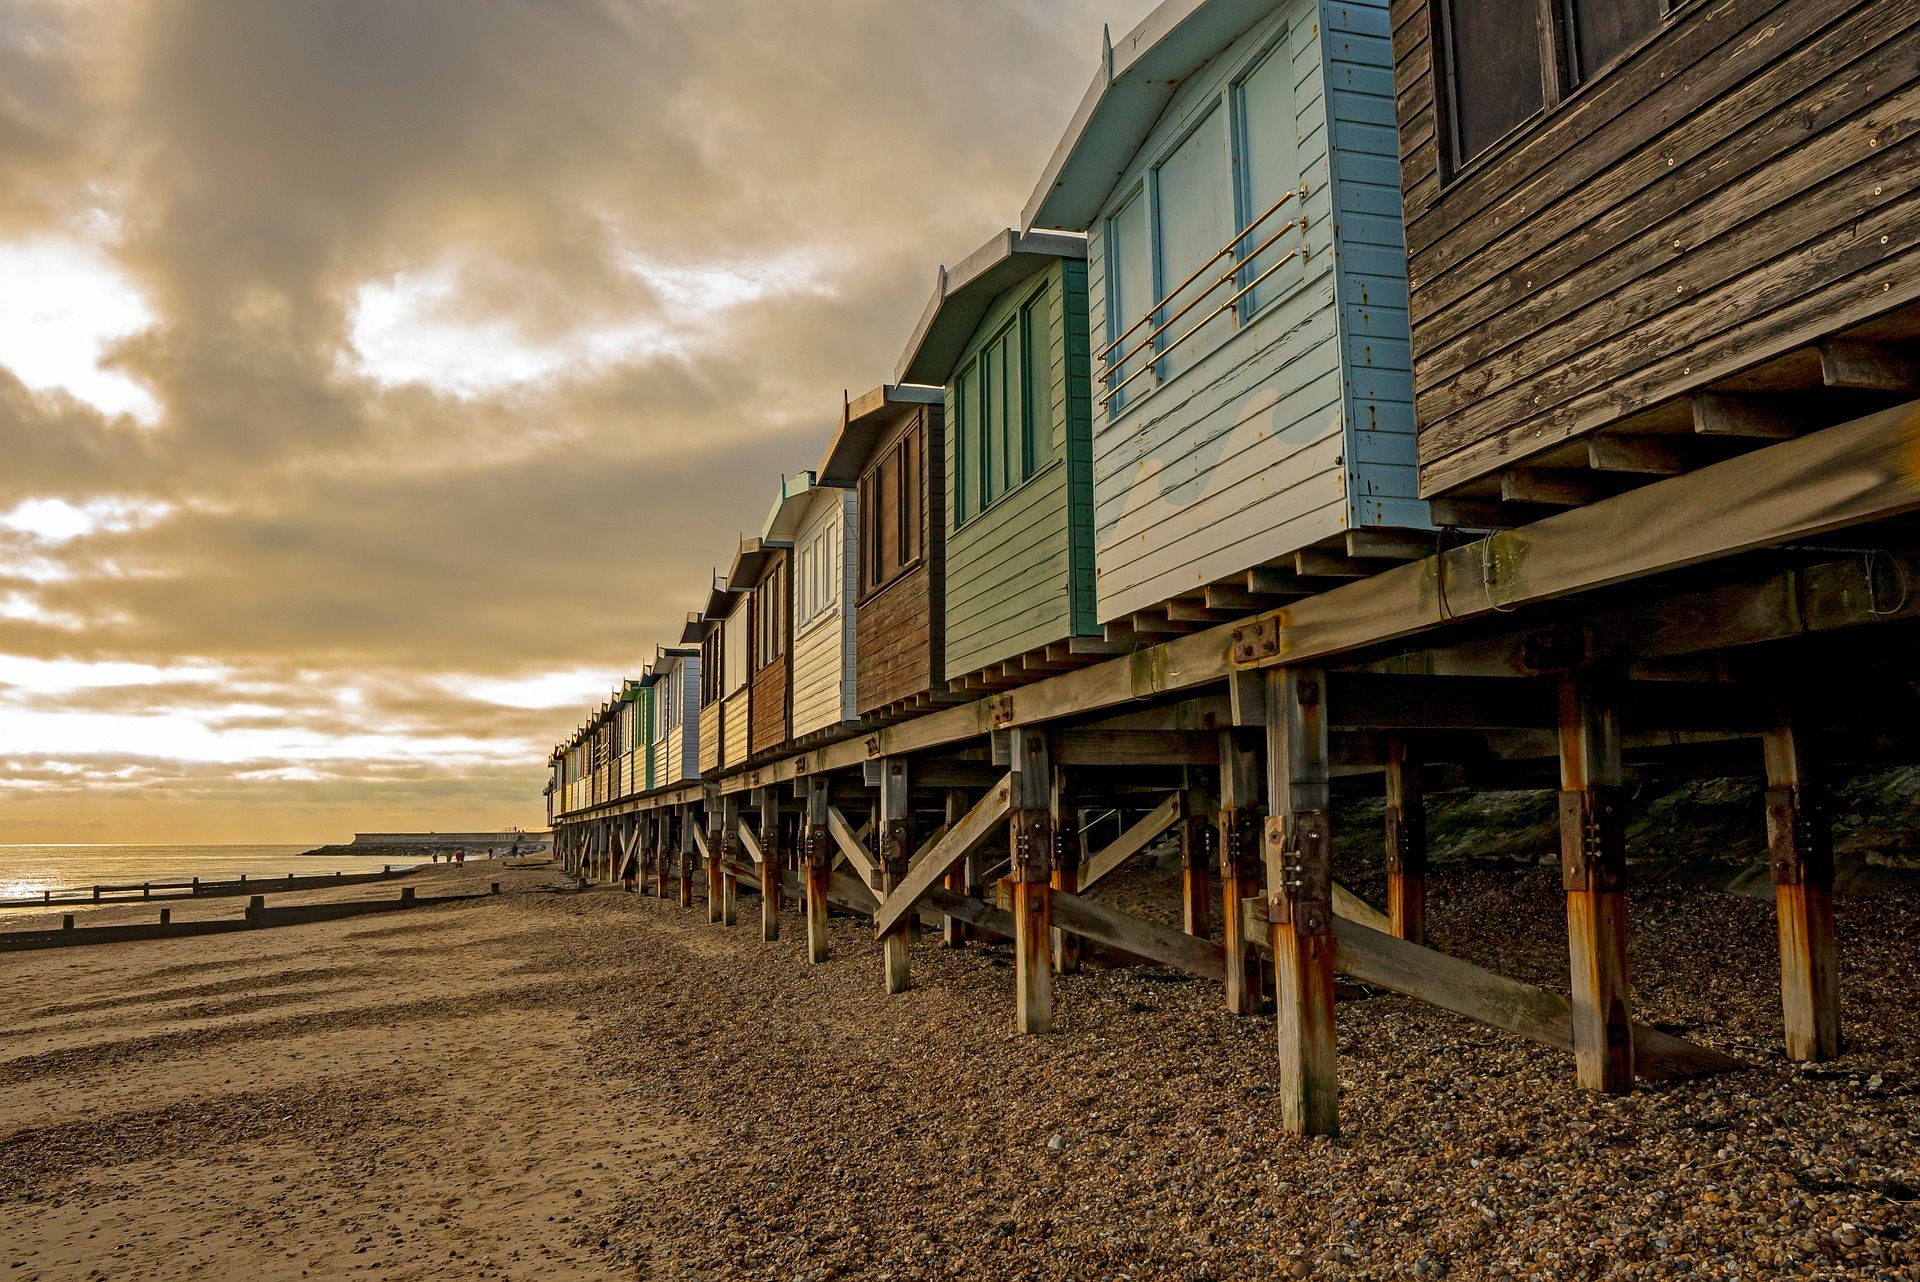 Huts on a beach in the U.K.